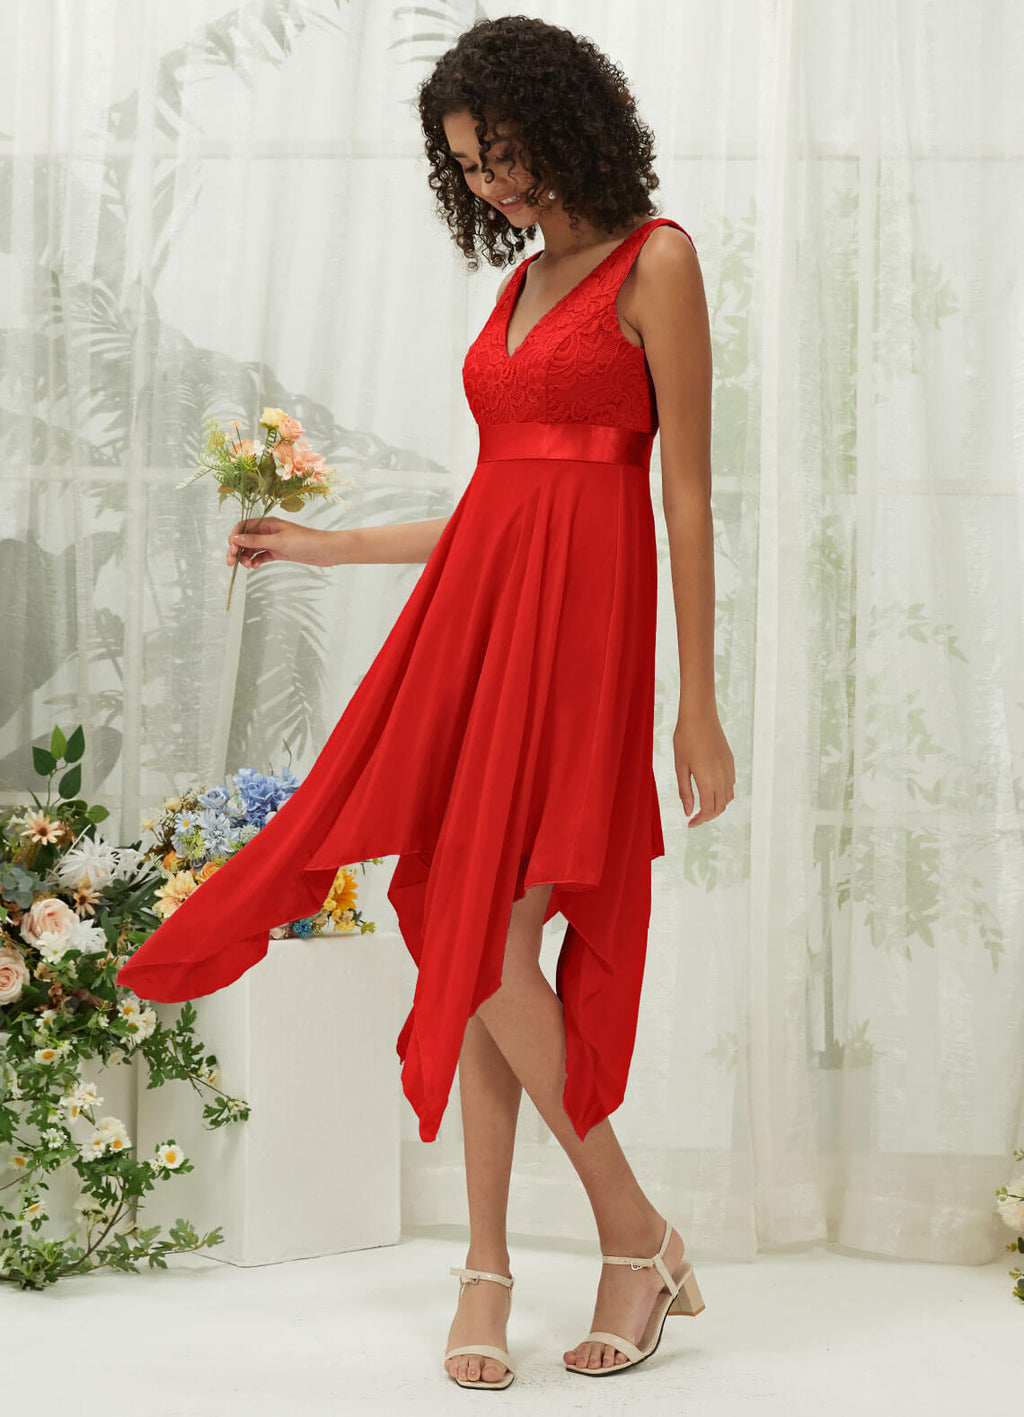 NZ Bridal Red Chiffon Lace Tea Length bridesmaid dresses 00207ep Evie a